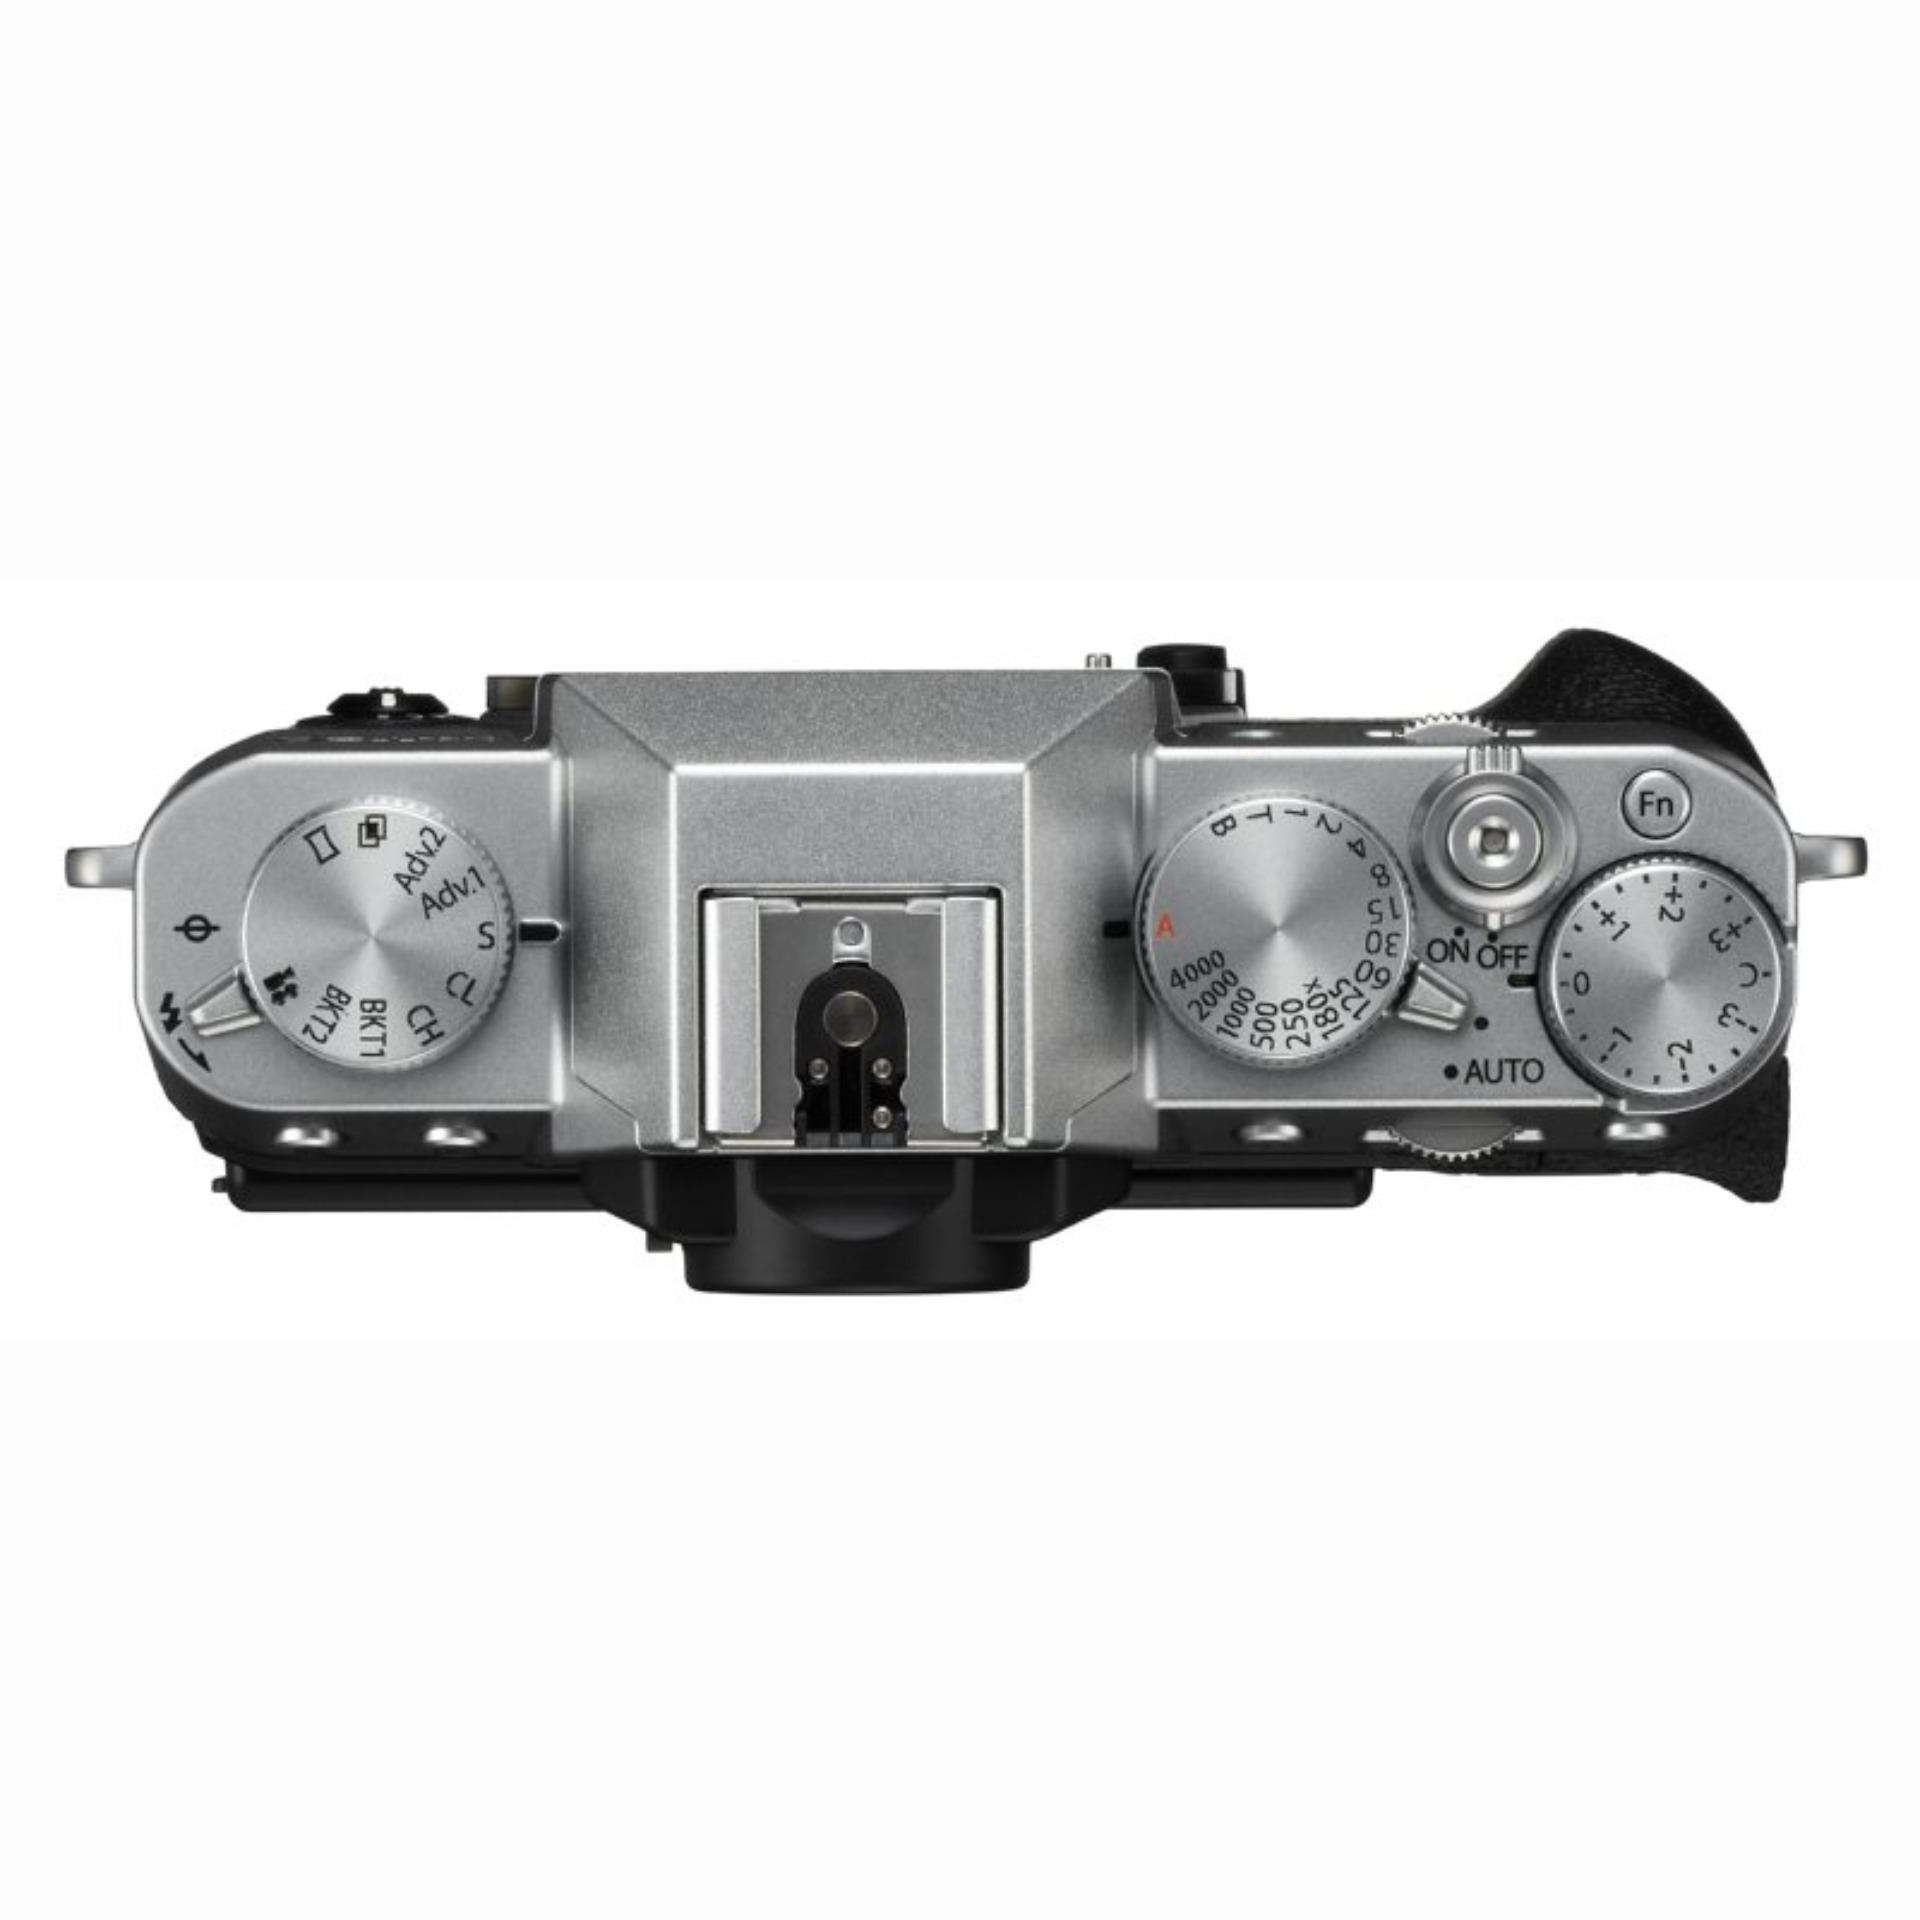 Fujifilm X-T20 Mirrorless Digital Camera Body Only (Silver)